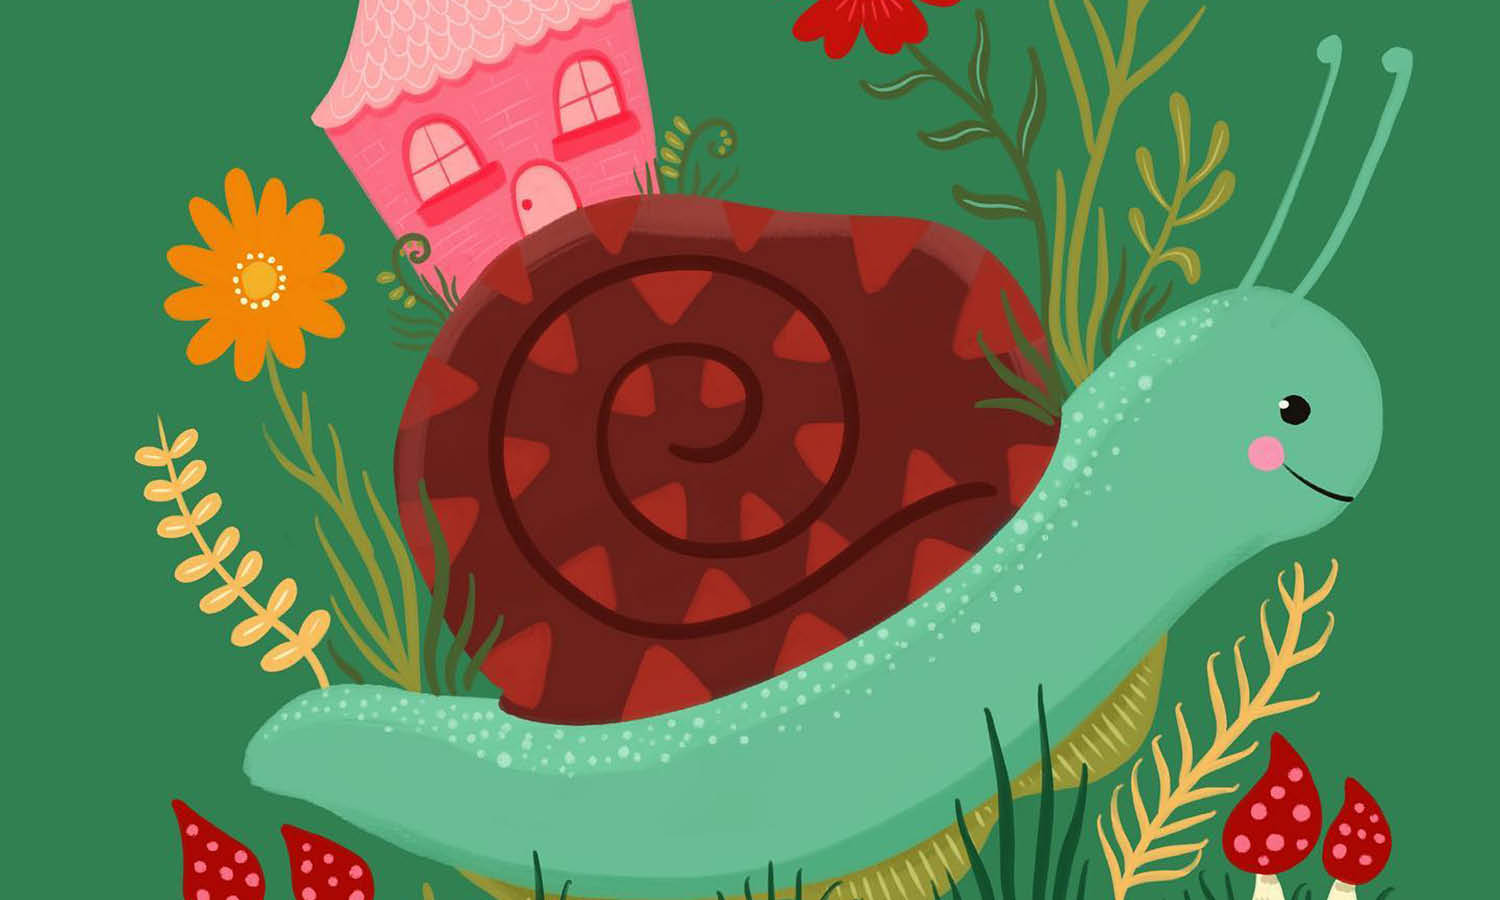 30 Best Snail Illustration Ideas You Should Check